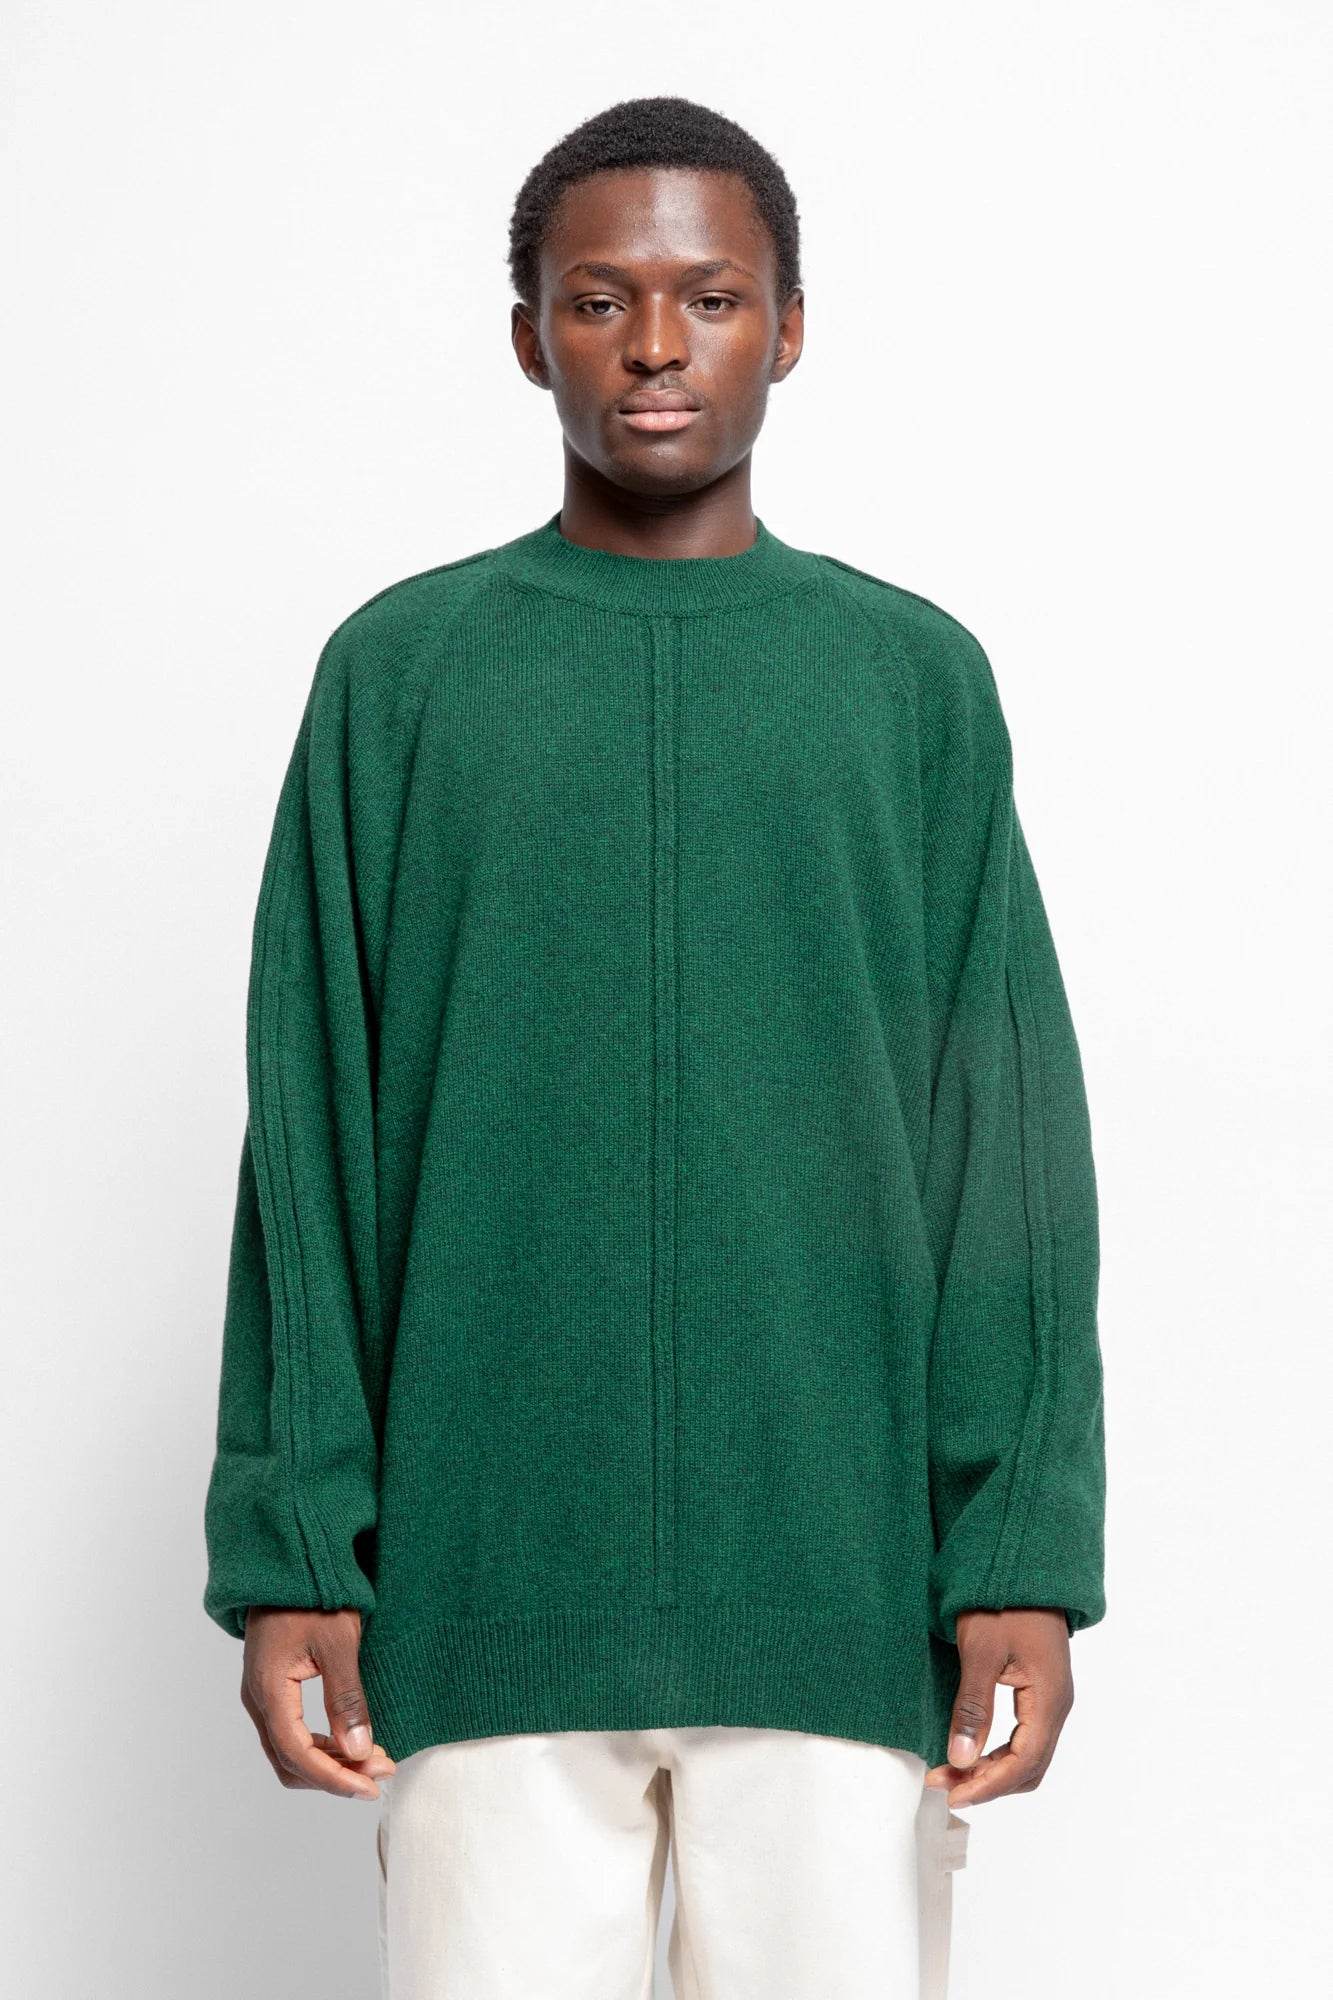 Serge unisex knit in lizzard green